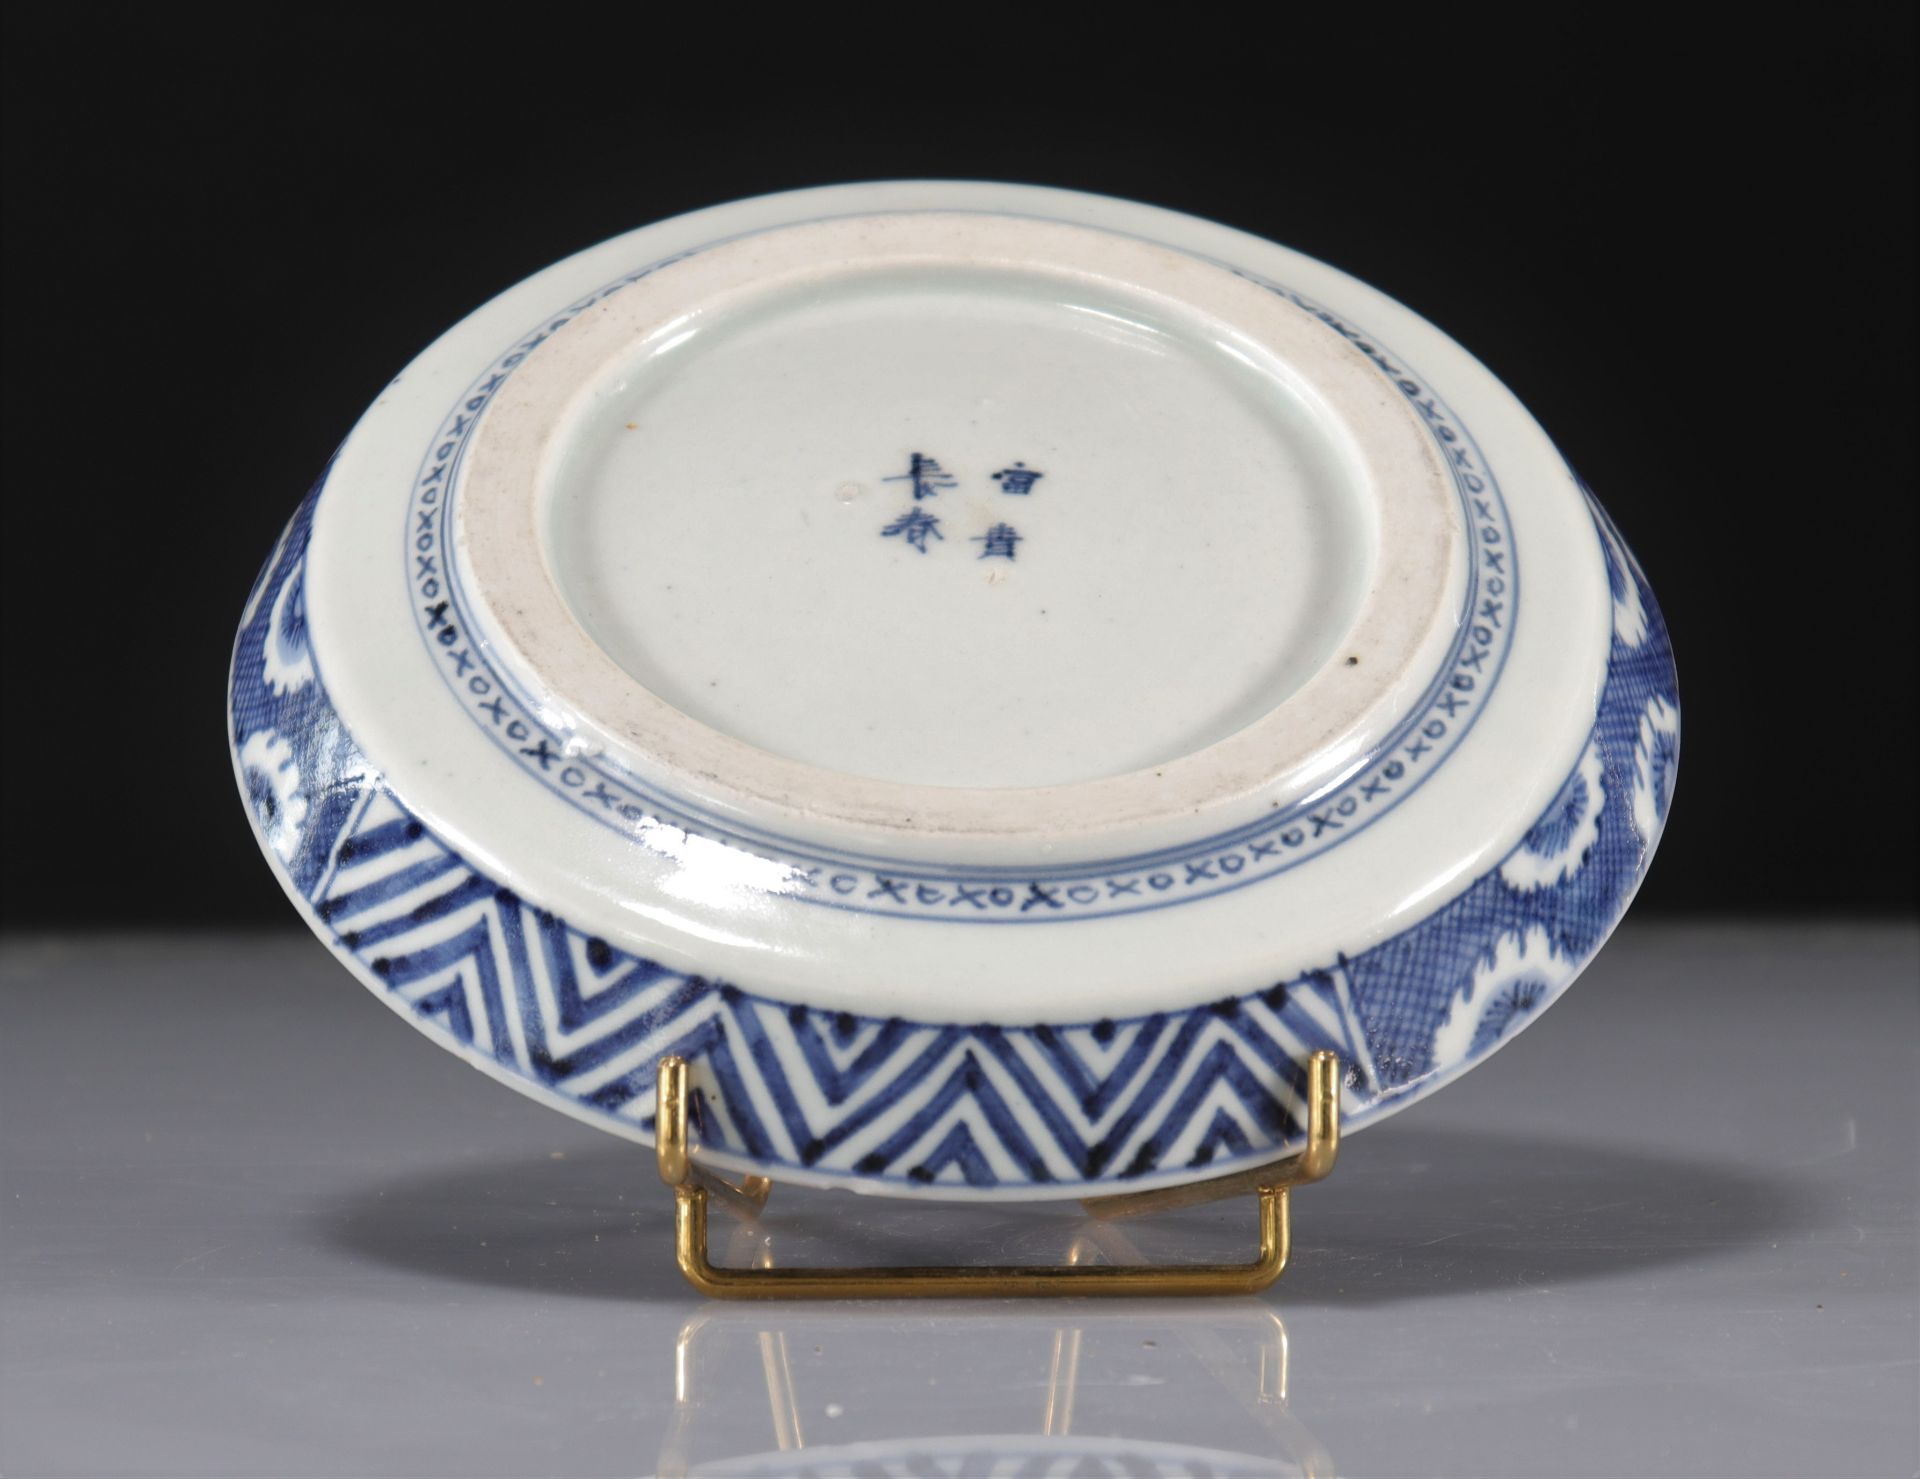 blanc-bleu porcelain plate - Image 2 of 2